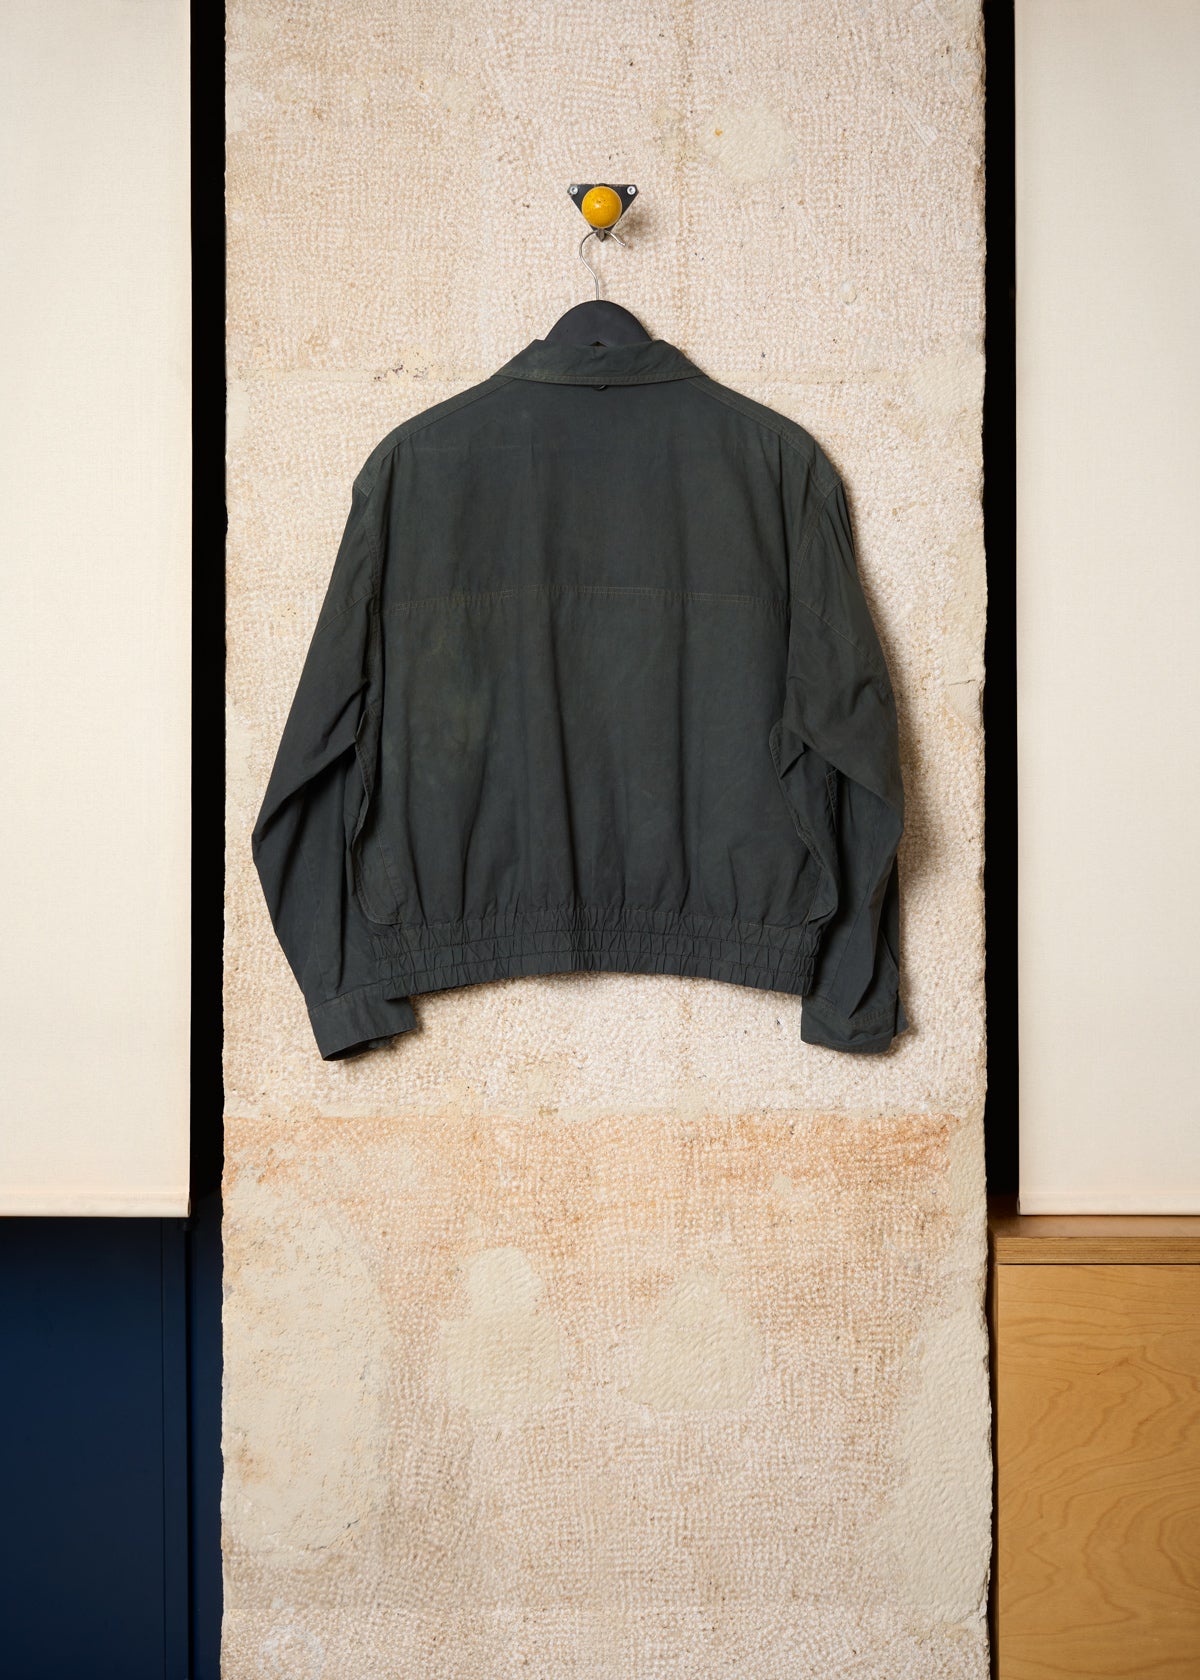 Giorgio Armani Light Cotton Work Jacket 1980's - Medium